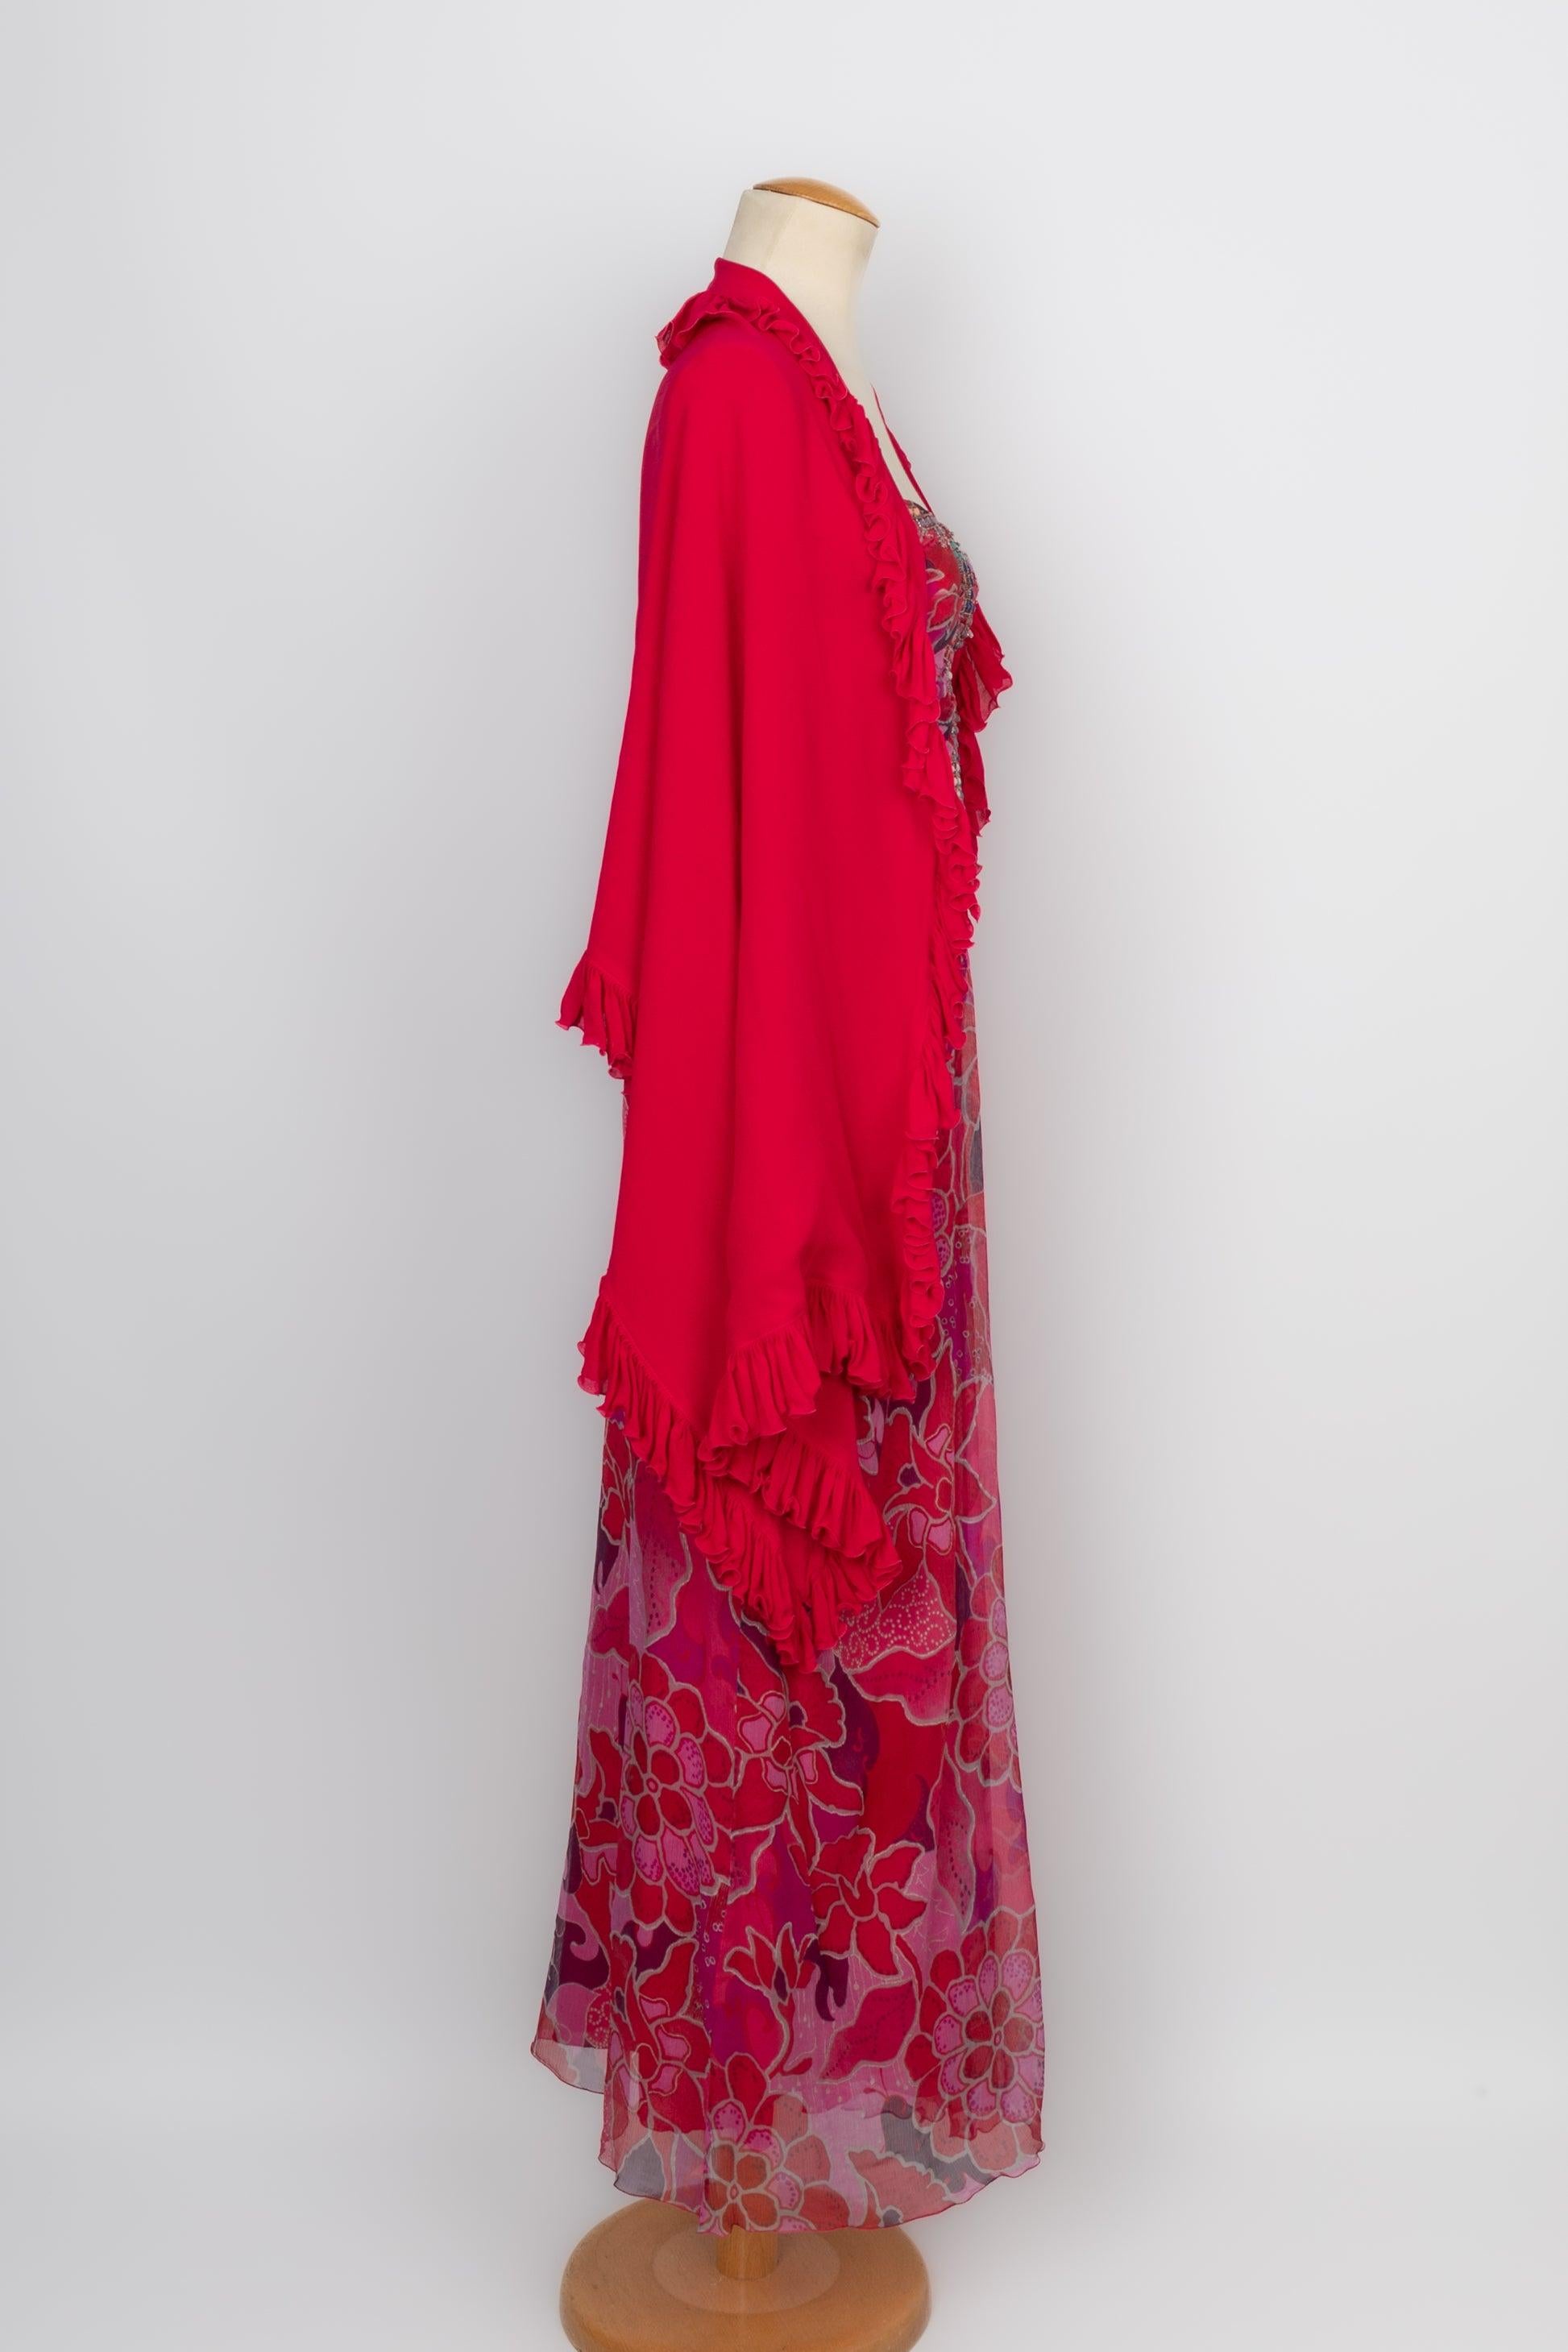 Ungaro Bustier Dress in Pink Tones In Good Condition For Sale In SAINT-OUEN-SUR-SEINE, FR